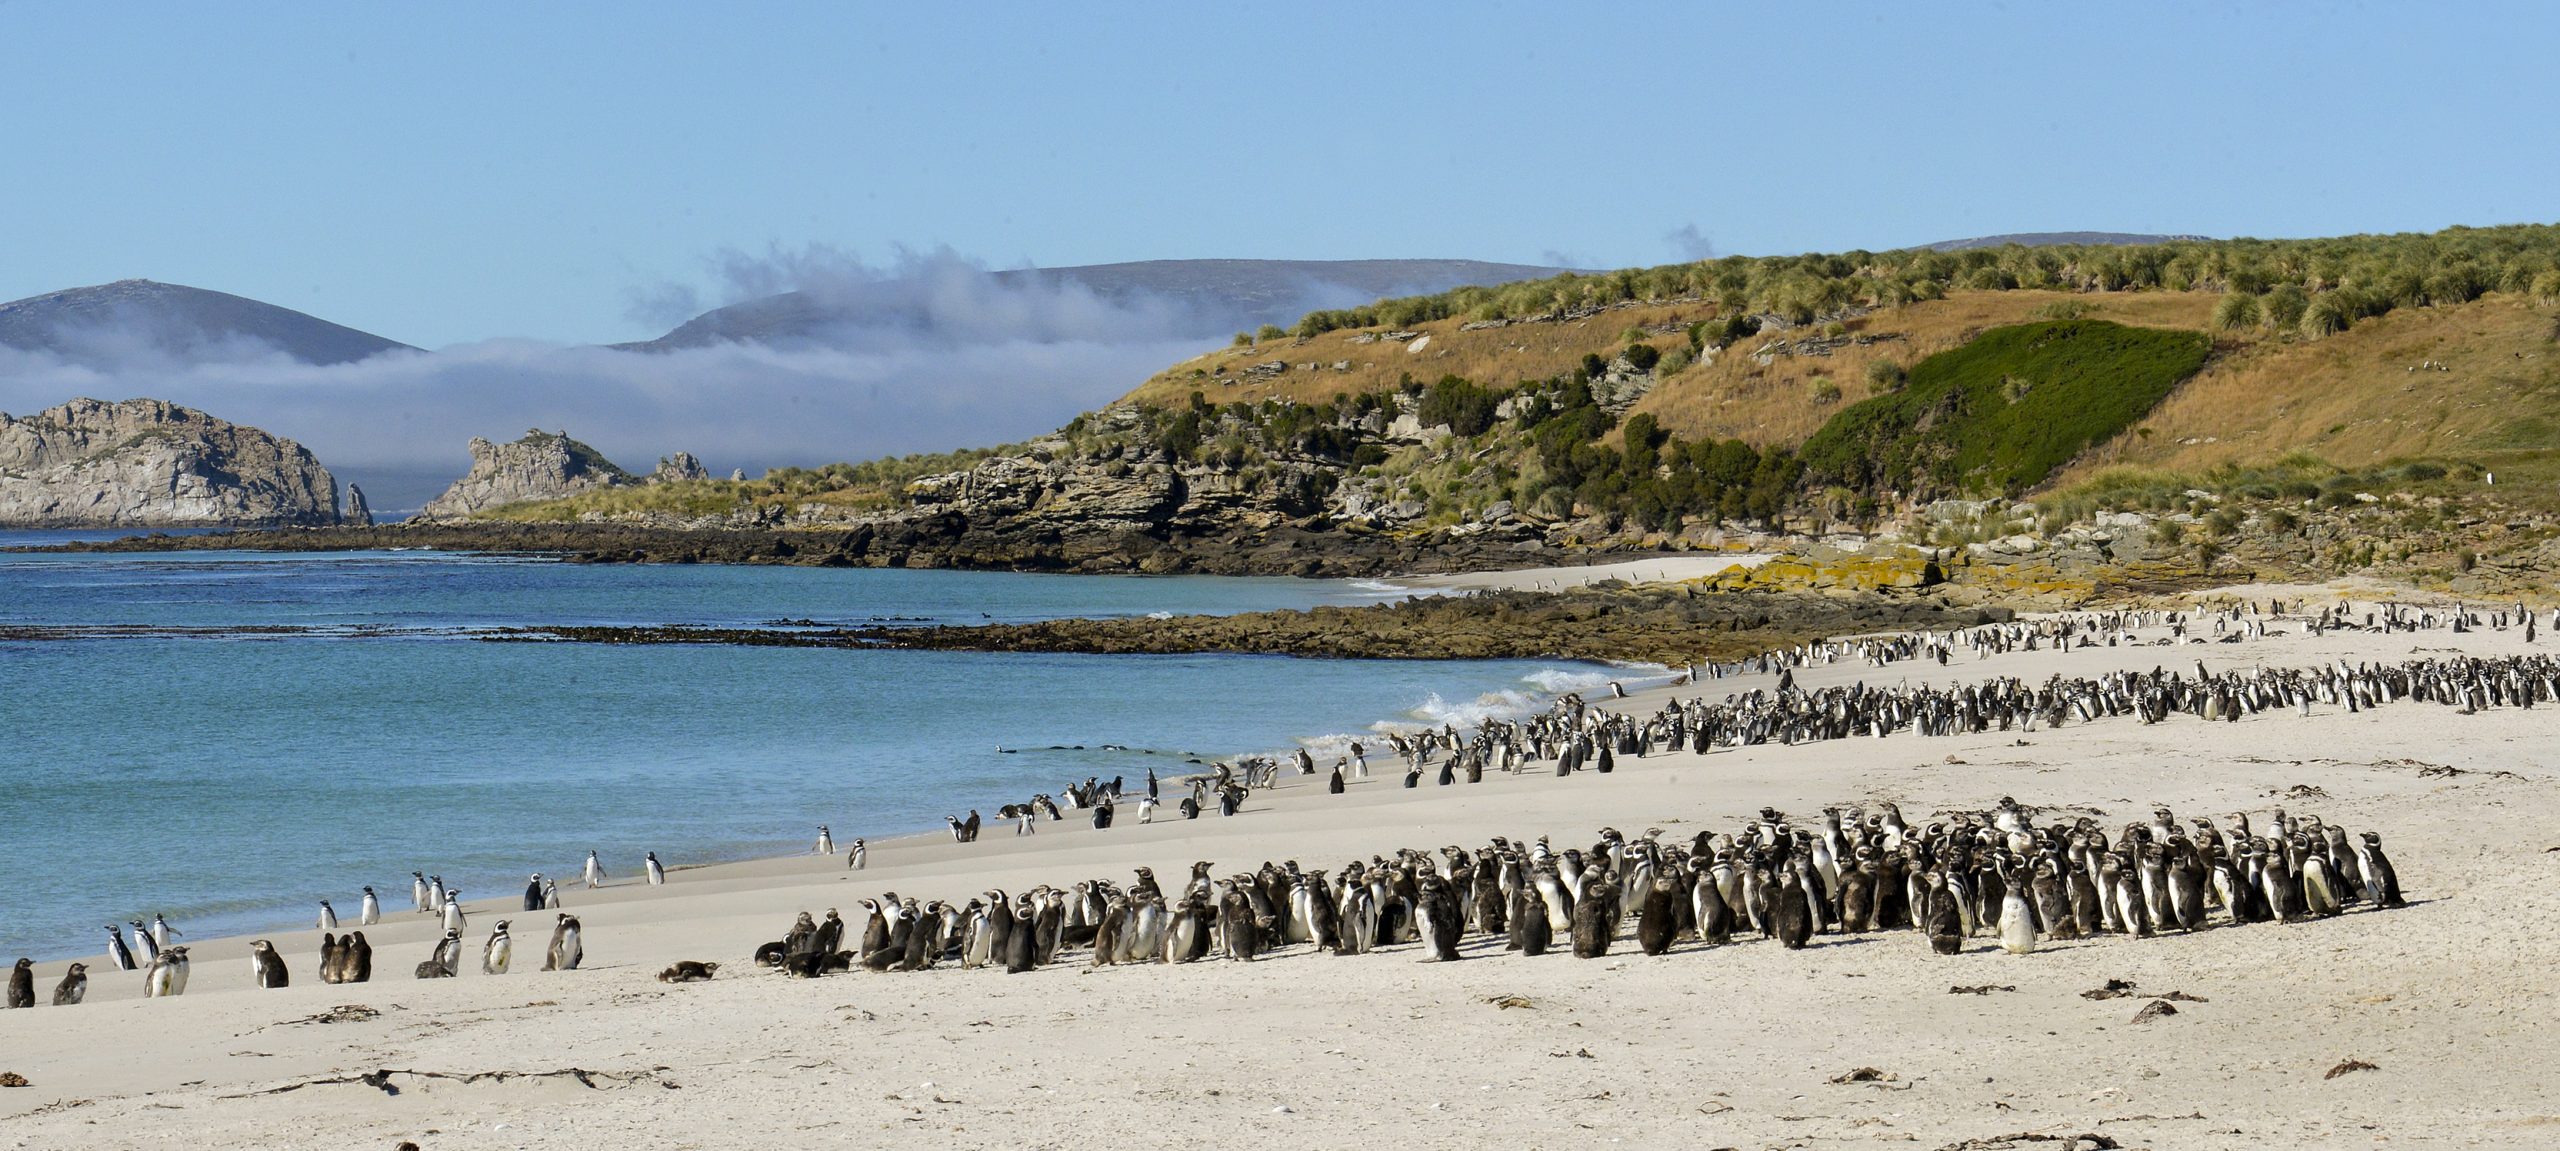 Magellanic Penguins, Falkland Islands_Werner Thiele